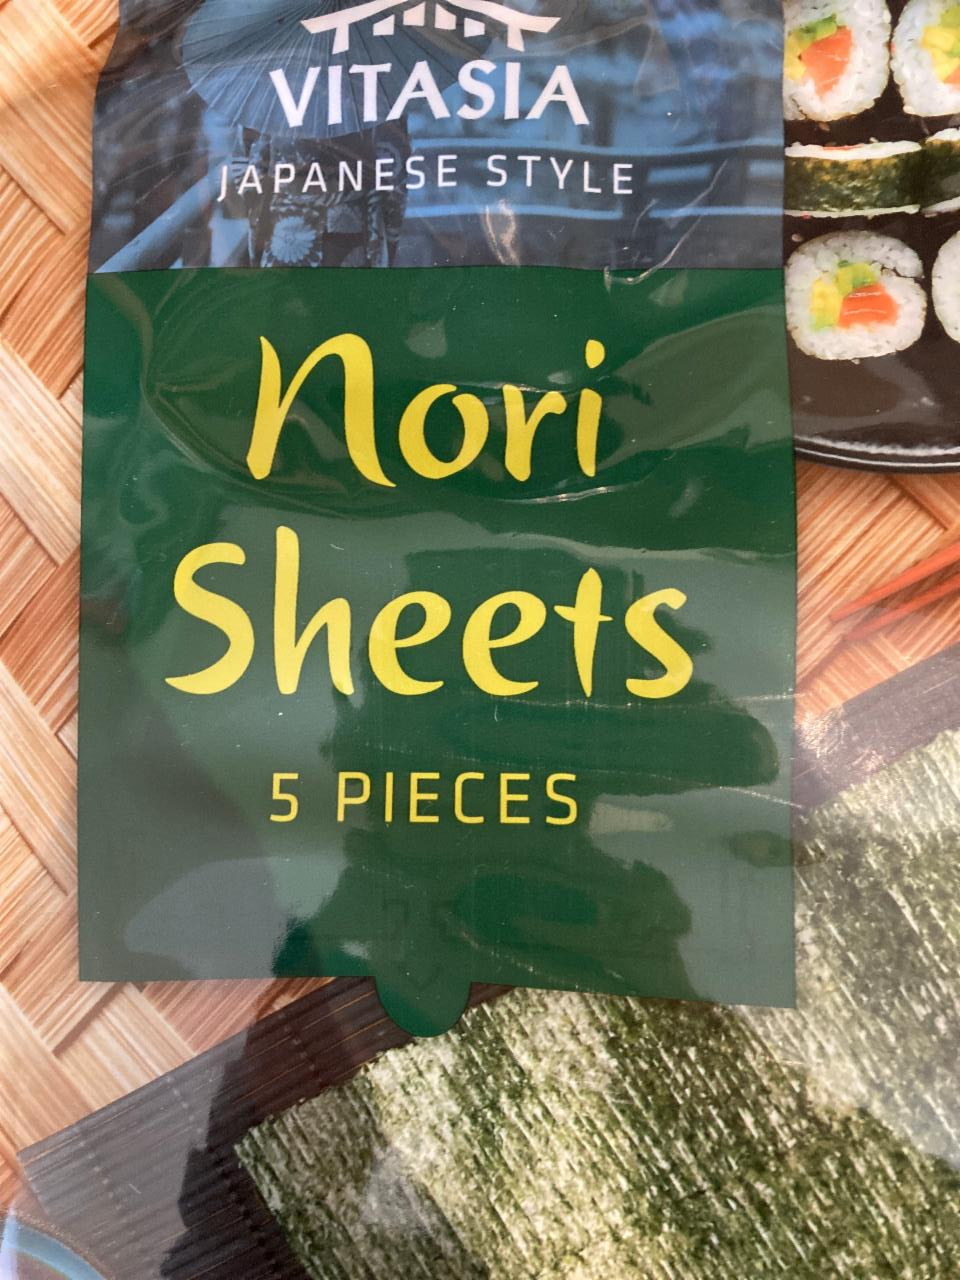 Fotografie - Japanese Style Nori Sheets Vitasia